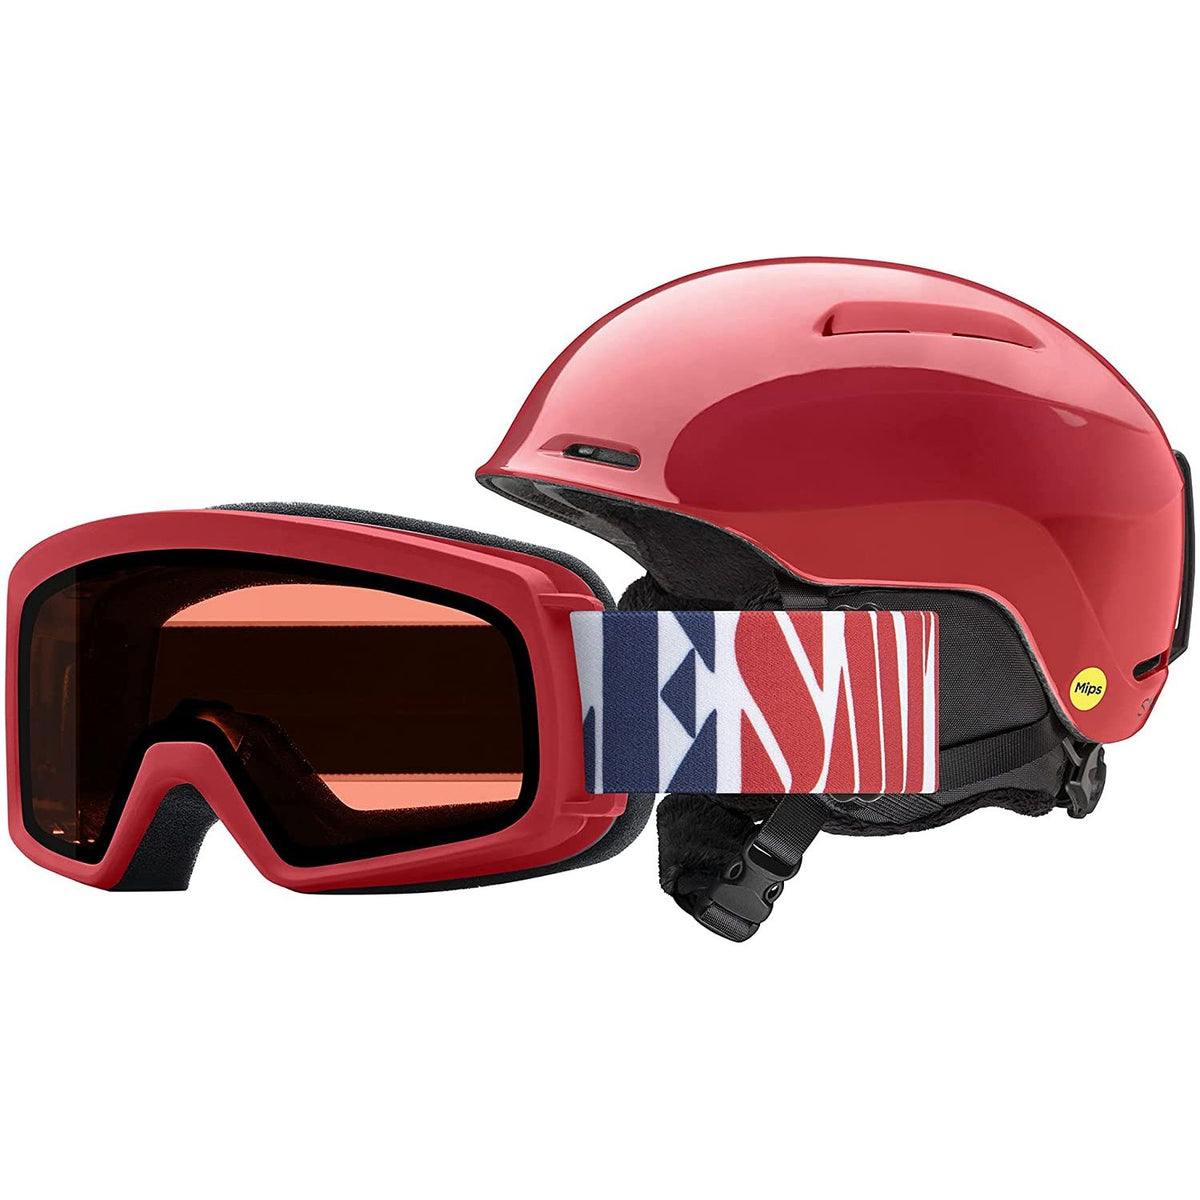 Smith Optics Glide Jr. MIPS Helmet/Rascal Goggle Combo